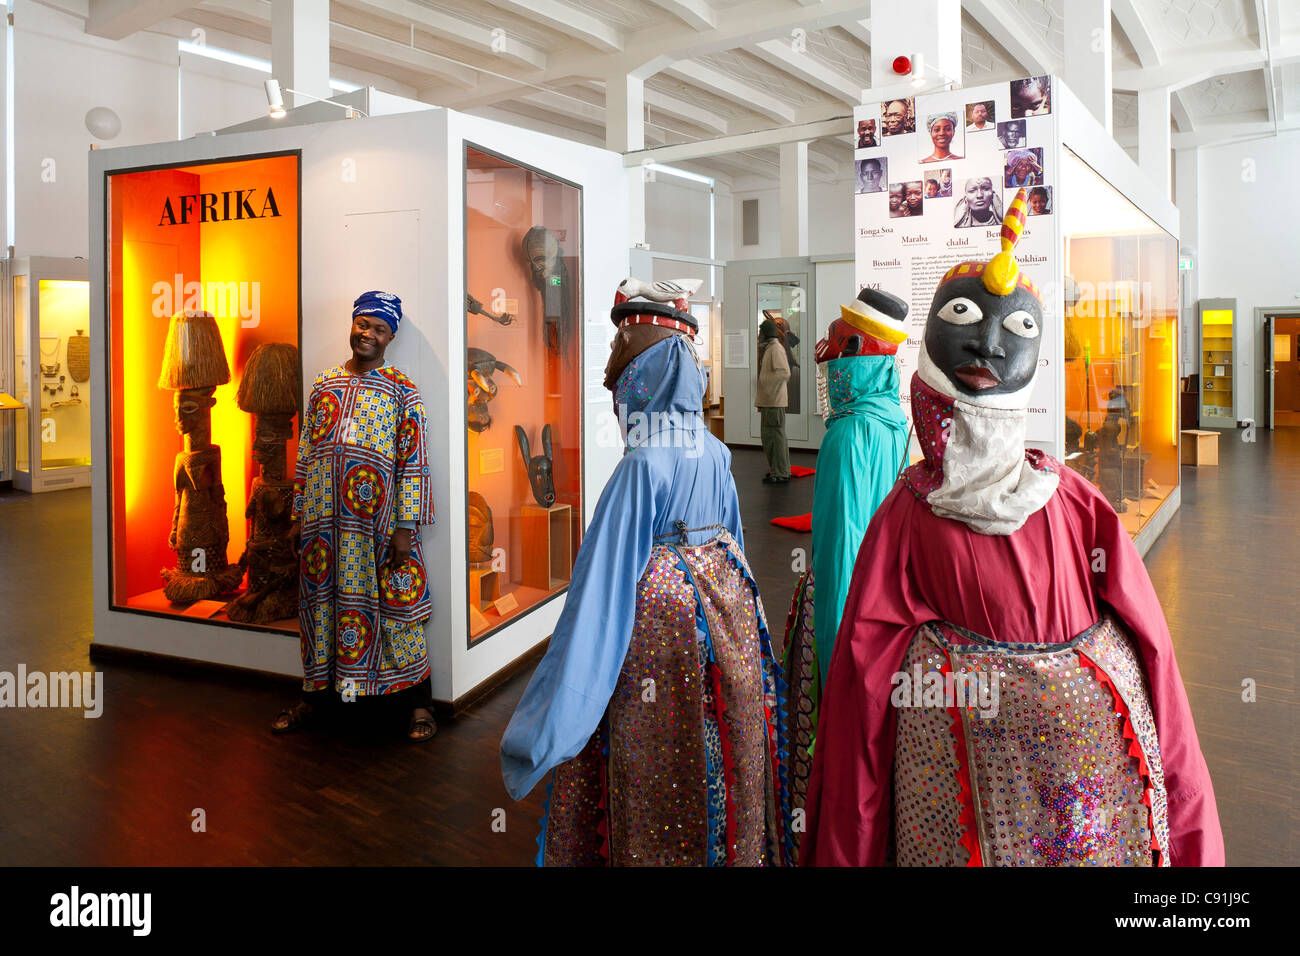 Museo di Etnologia di Amburgo, Africa fieristico, città anseatica di Amburgo, Germania, Europa Foto Stock